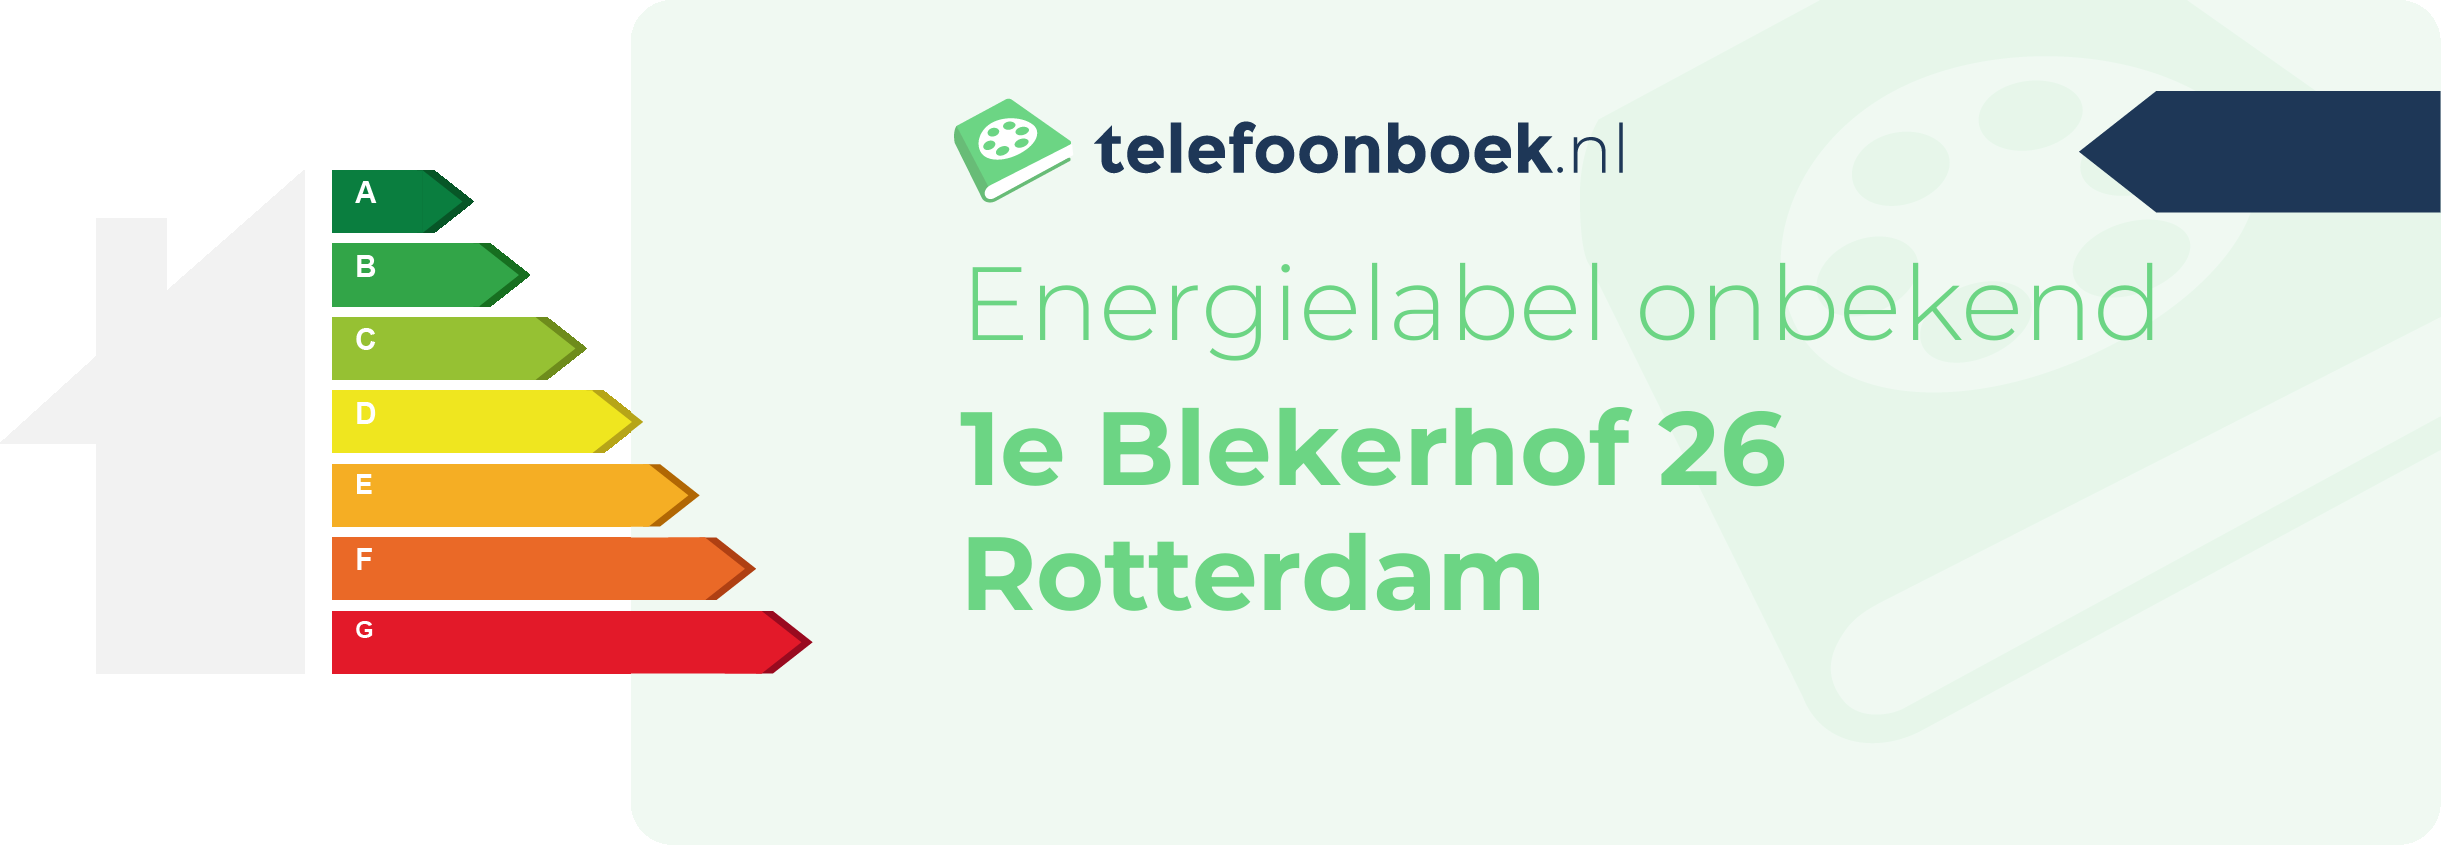 Energielabel 1e Blekerhof 26 Rotterdam